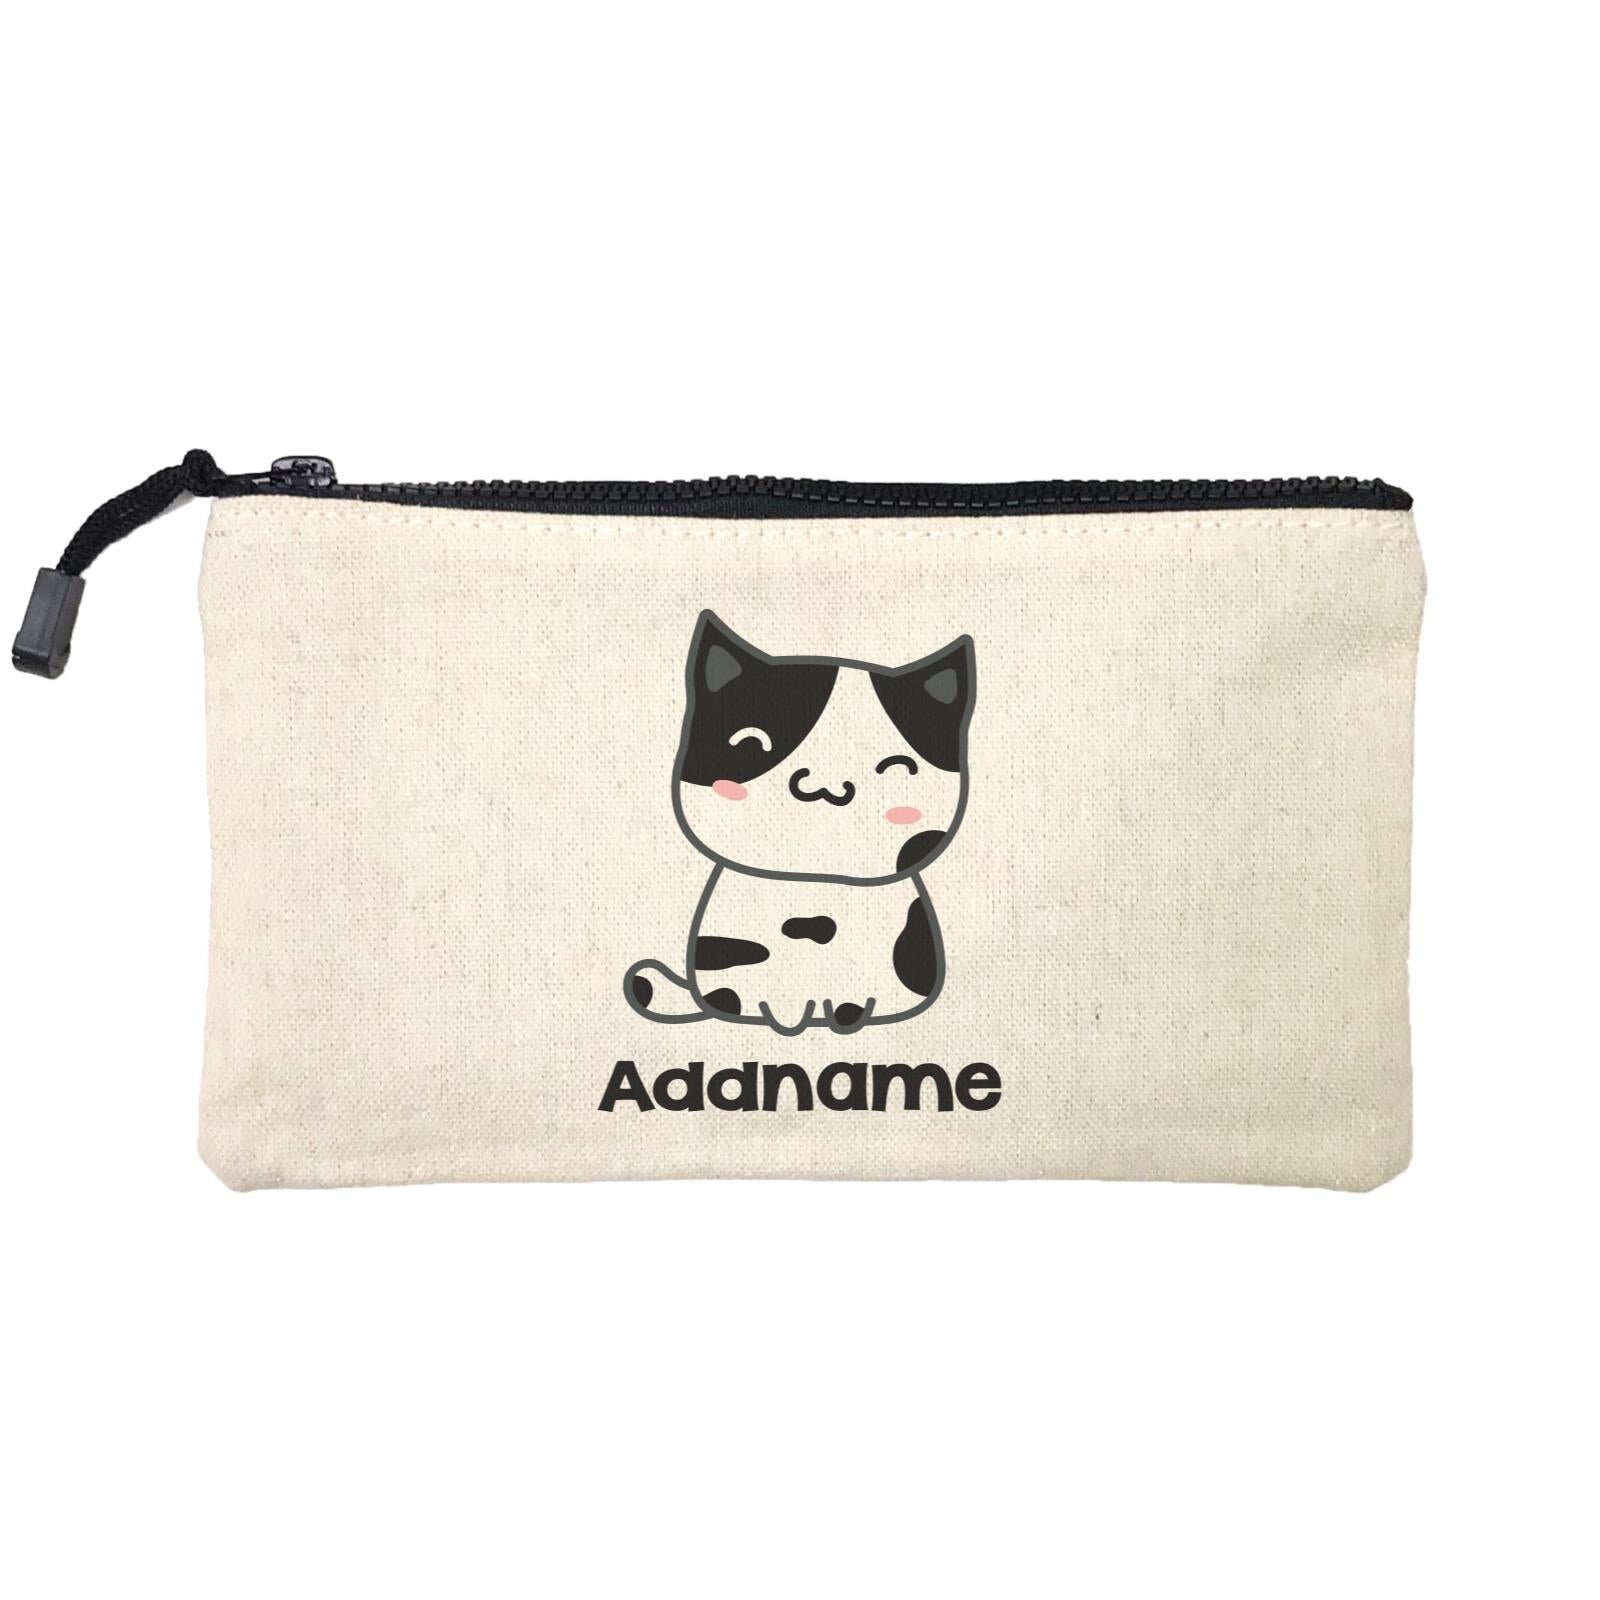 Drawn Adorable Cats Black & White Addname Mini Accessories Stationery Pouch